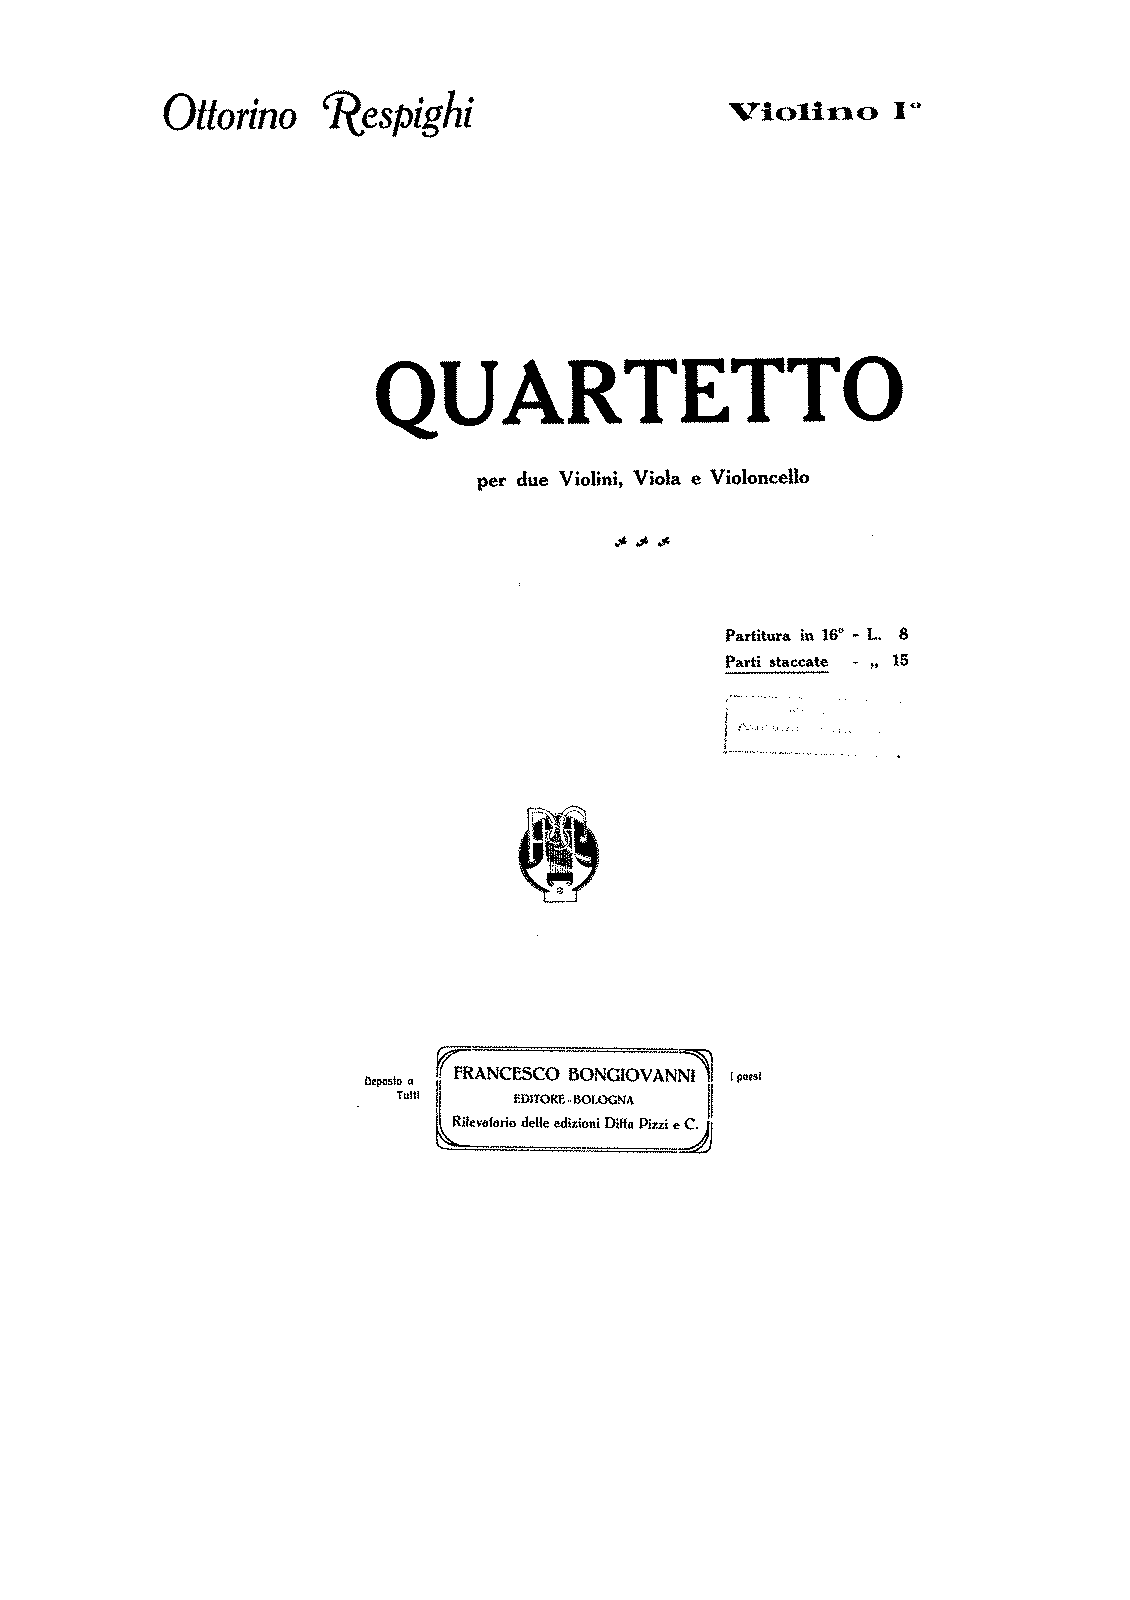 String Quartet No.3, P.53 (Respighi, Ottorino) - IMSLP